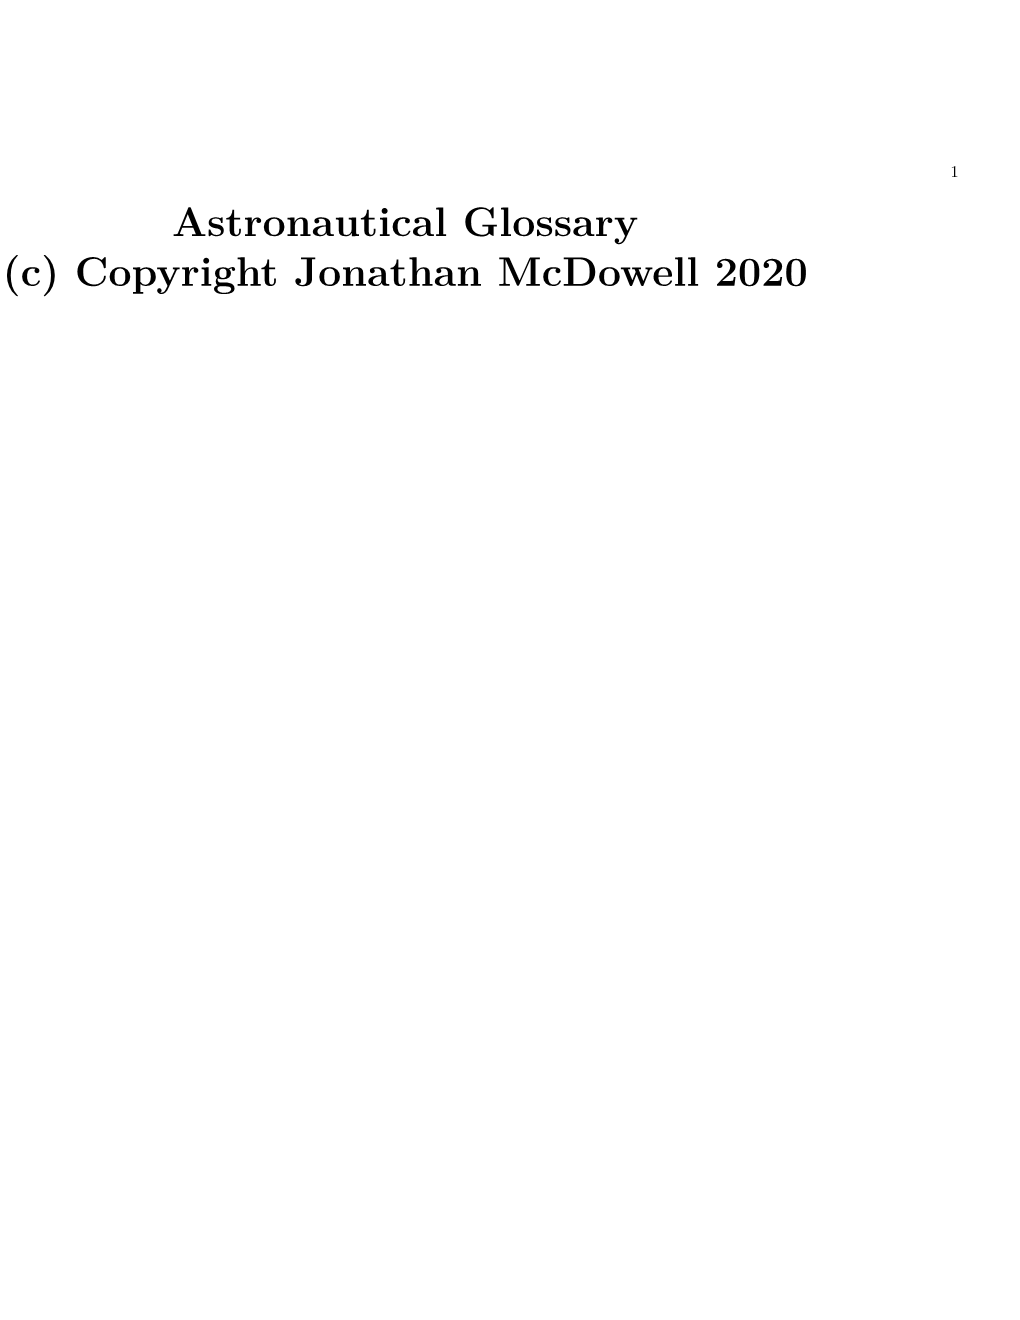 Astronautical Glossary (C) Copyright Jonathan Mcdowell 2020 2 Chapter 1